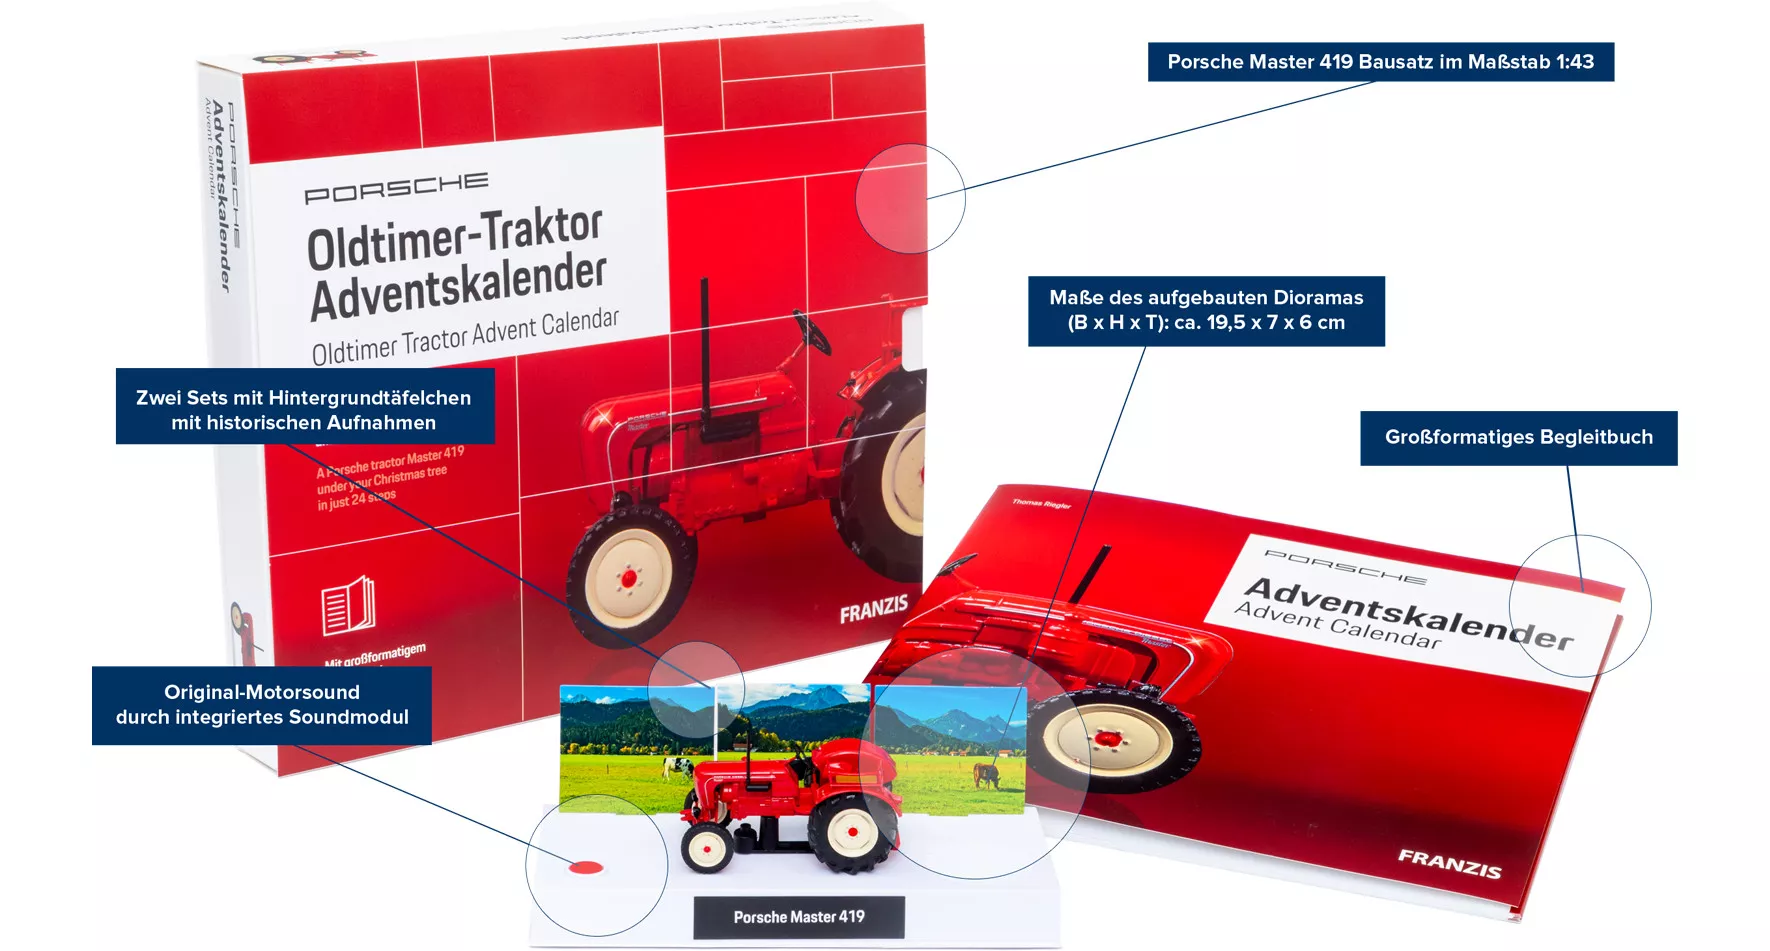 Franzis Porsche Oldtimer-Traktor Adventskalender 2023 - Inhalt